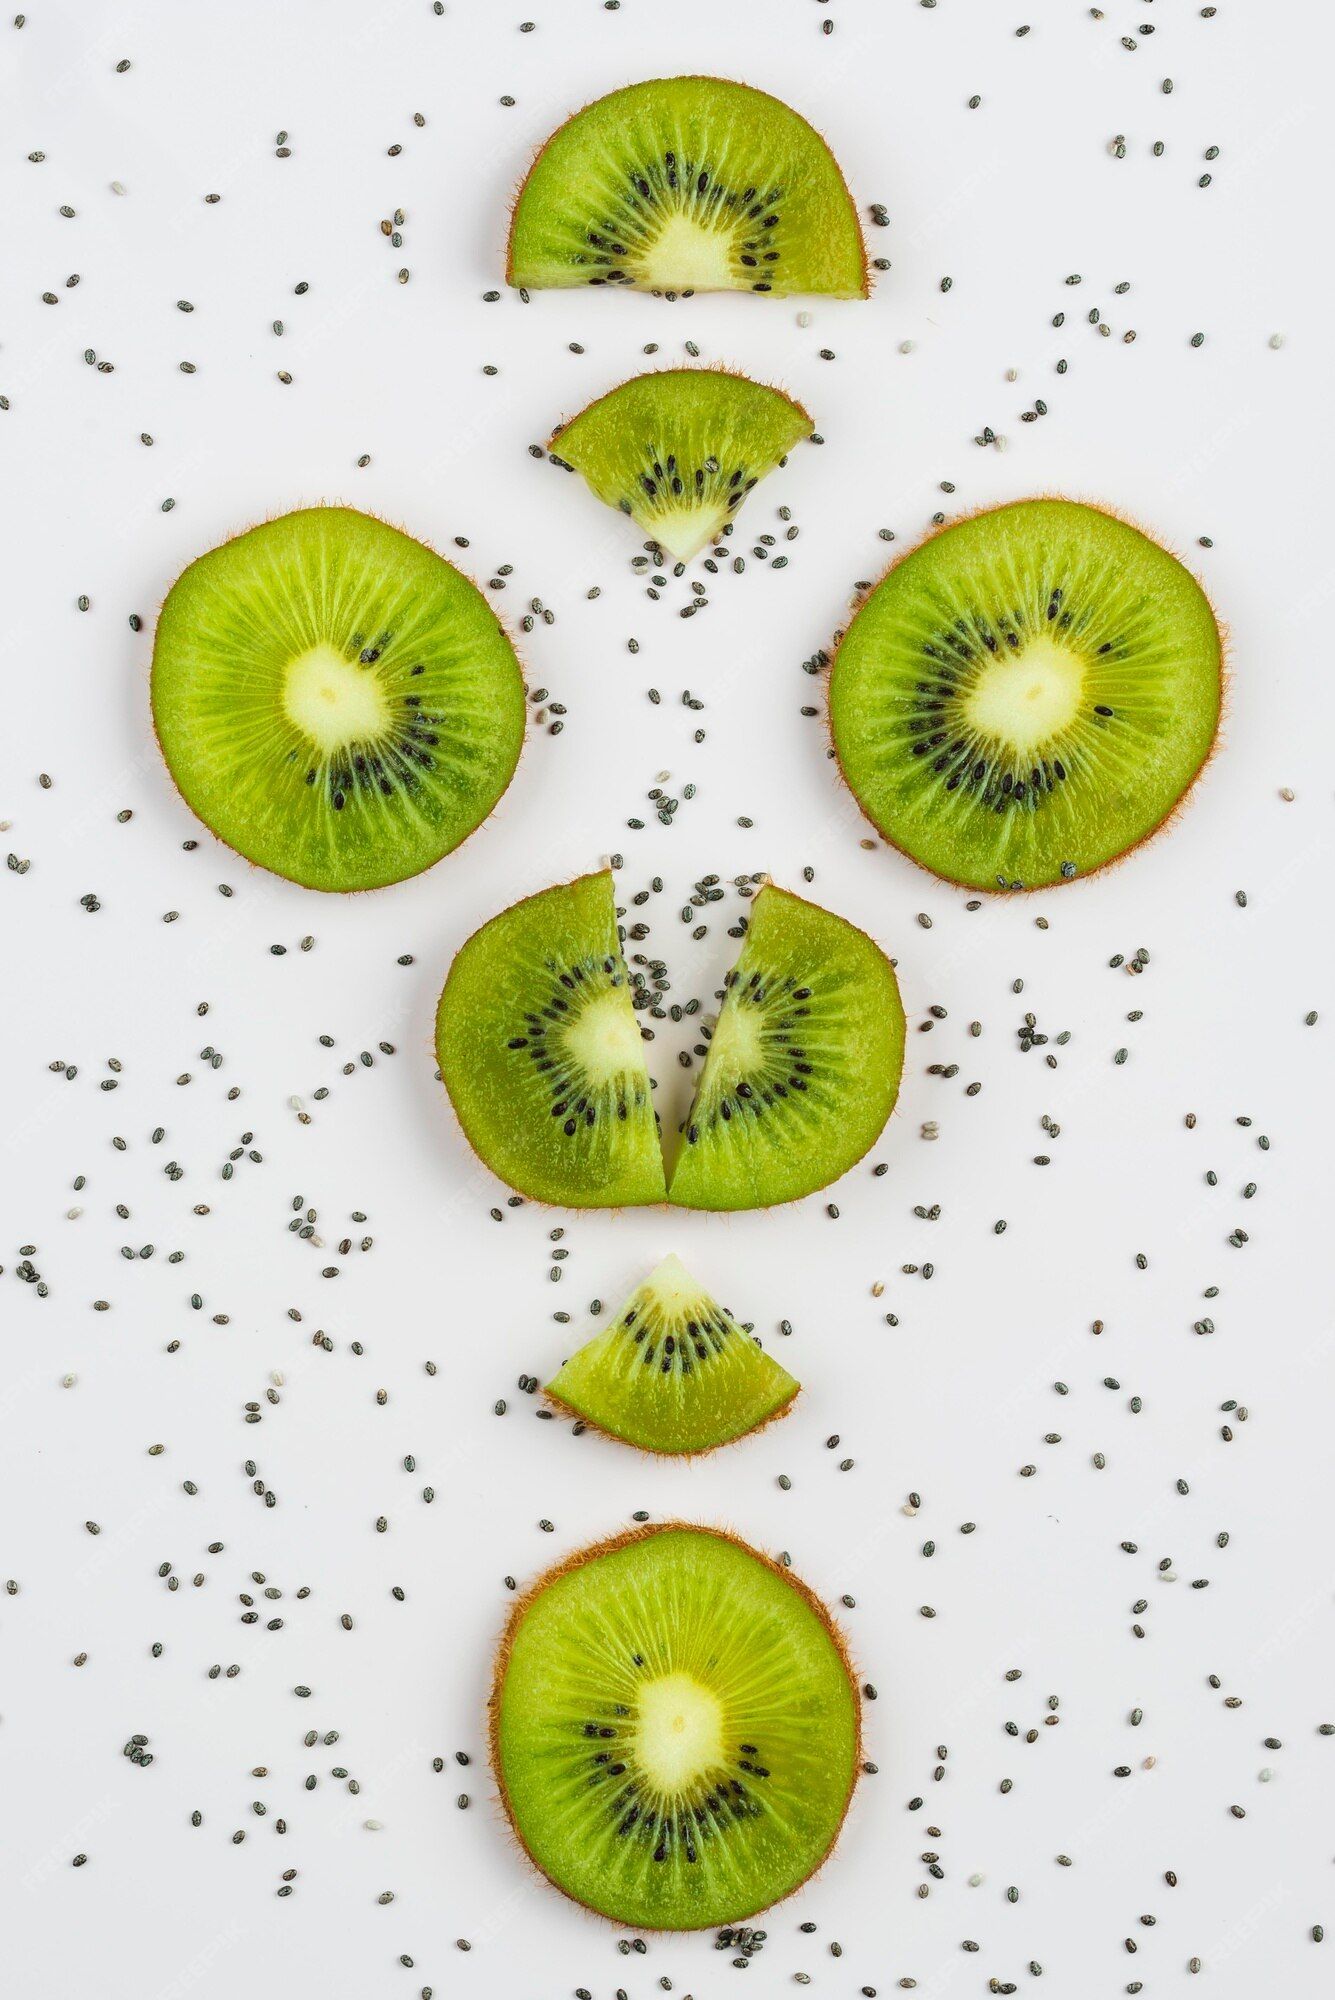 Kiwi With Kiwi Seeds Picture